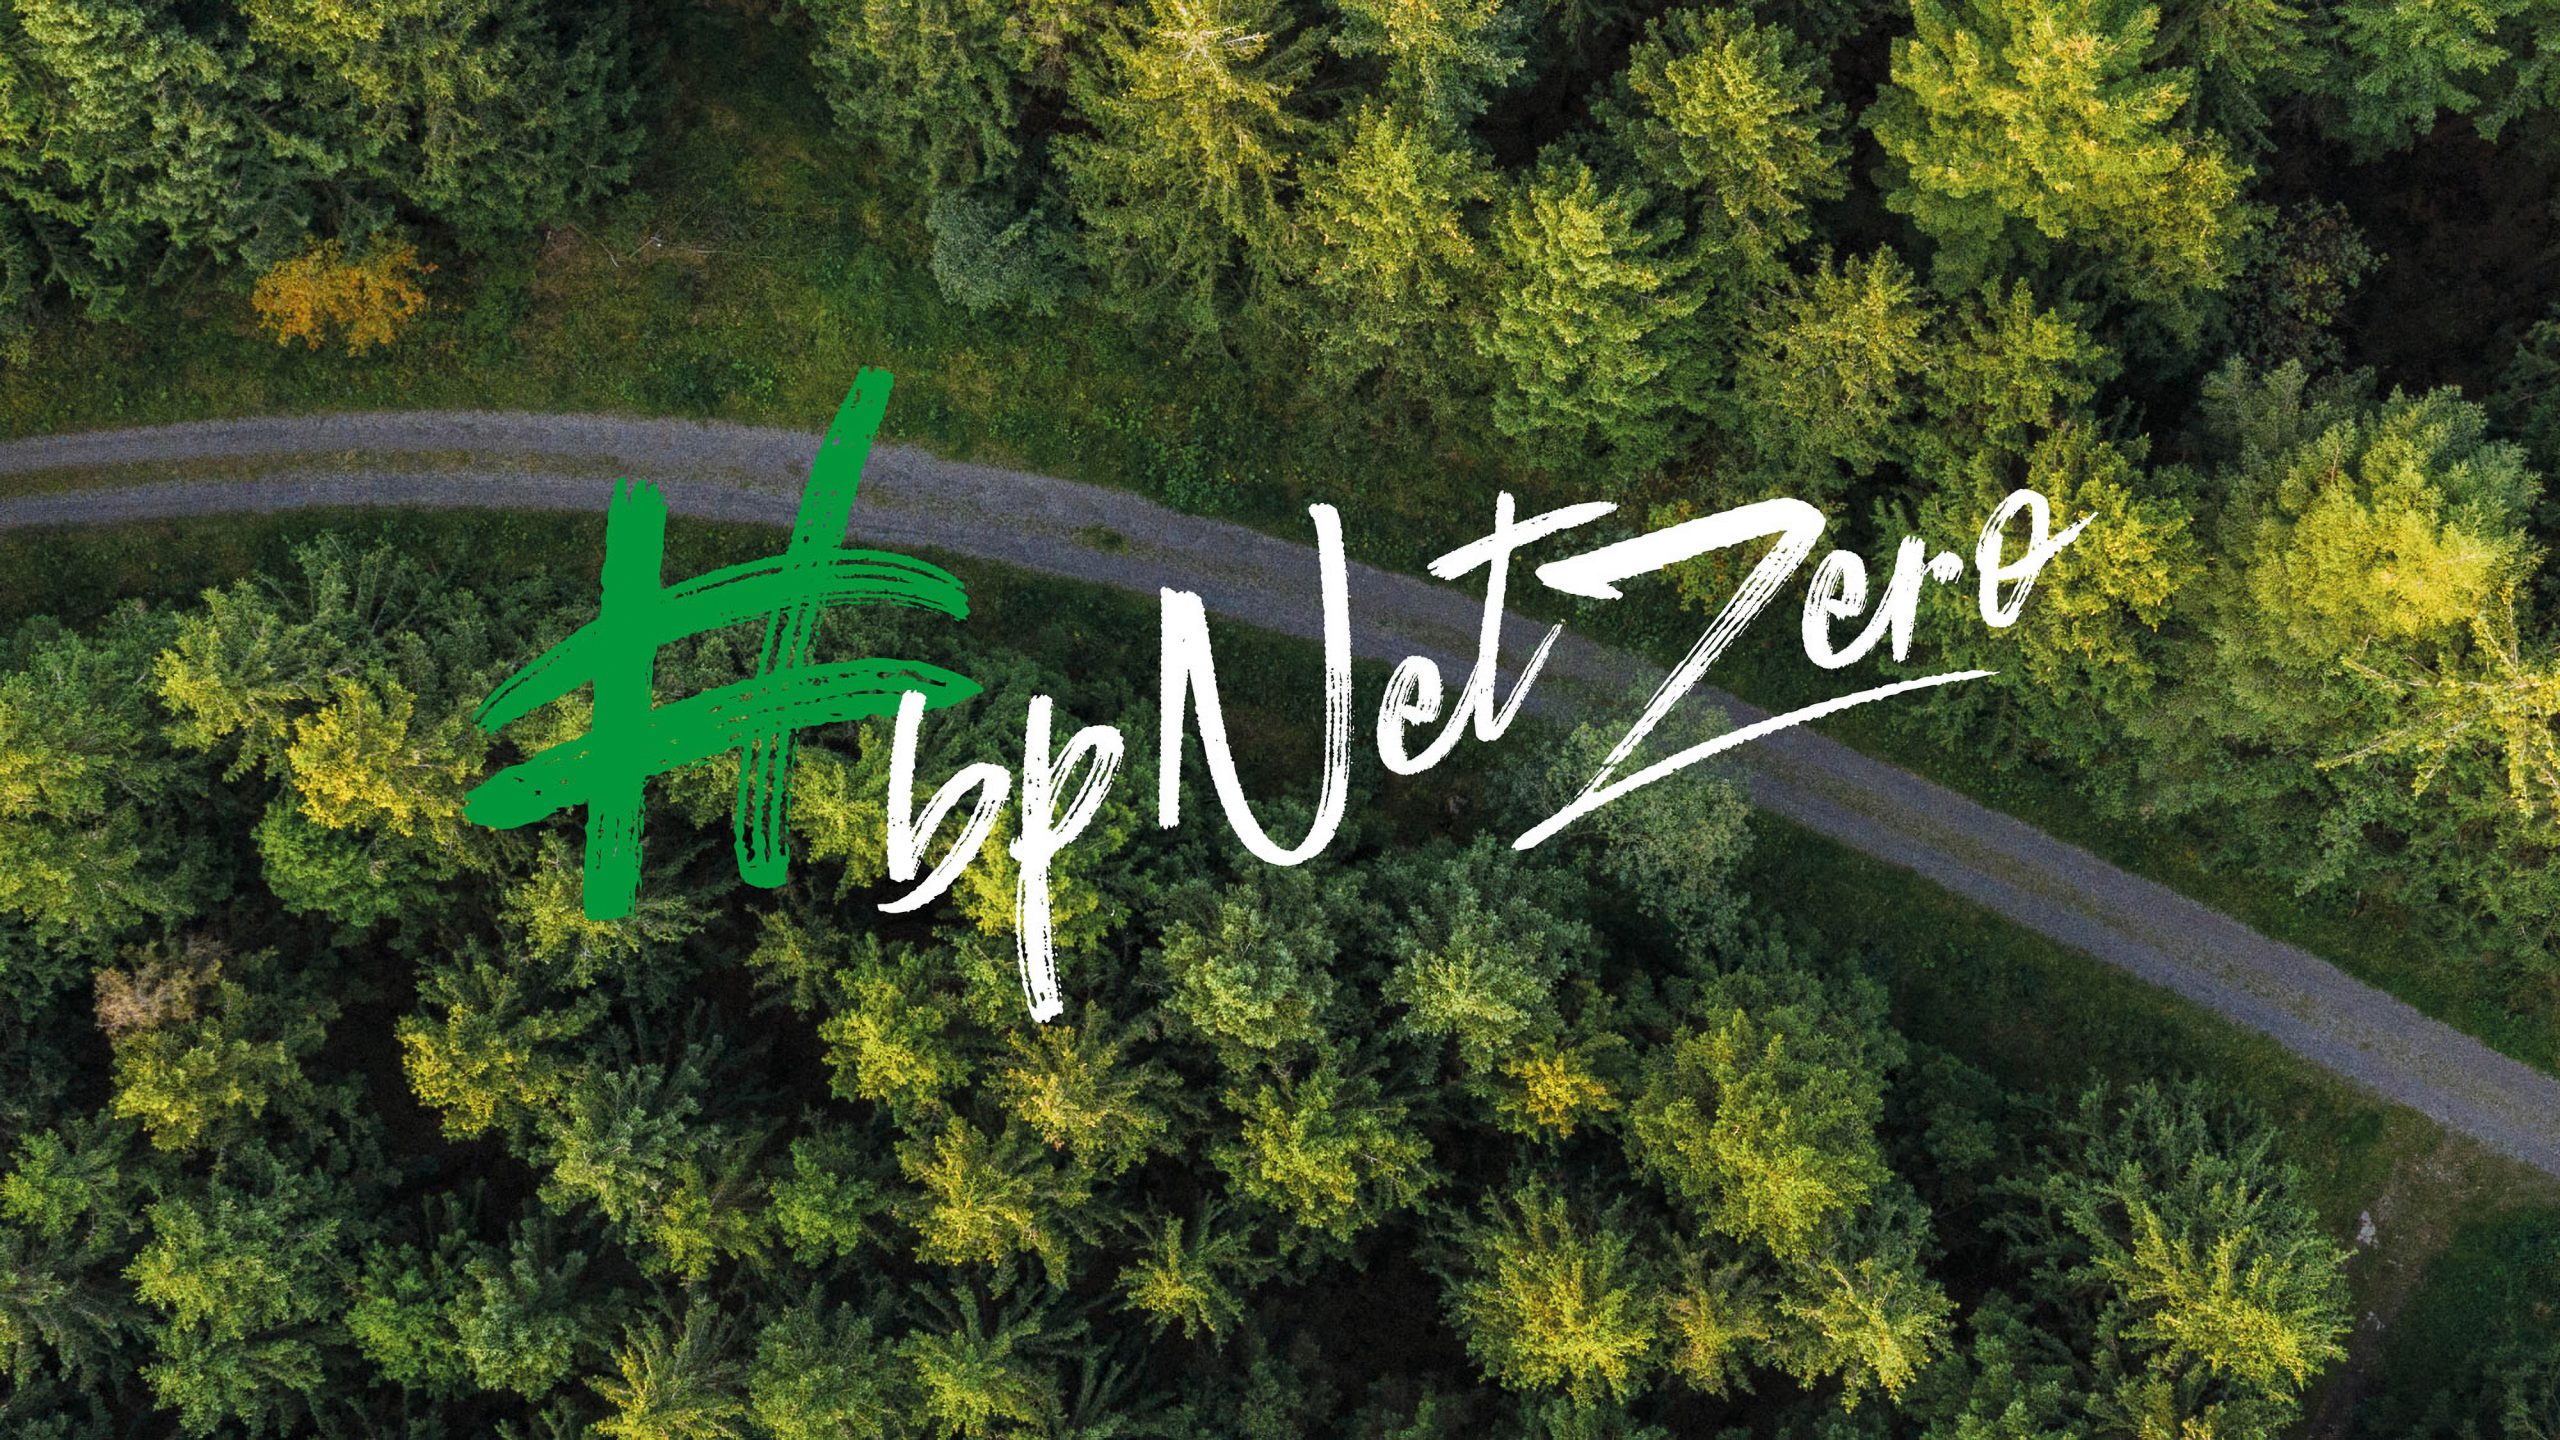 BP licenses Sam Parretts Better Times for Net Zero Campaign